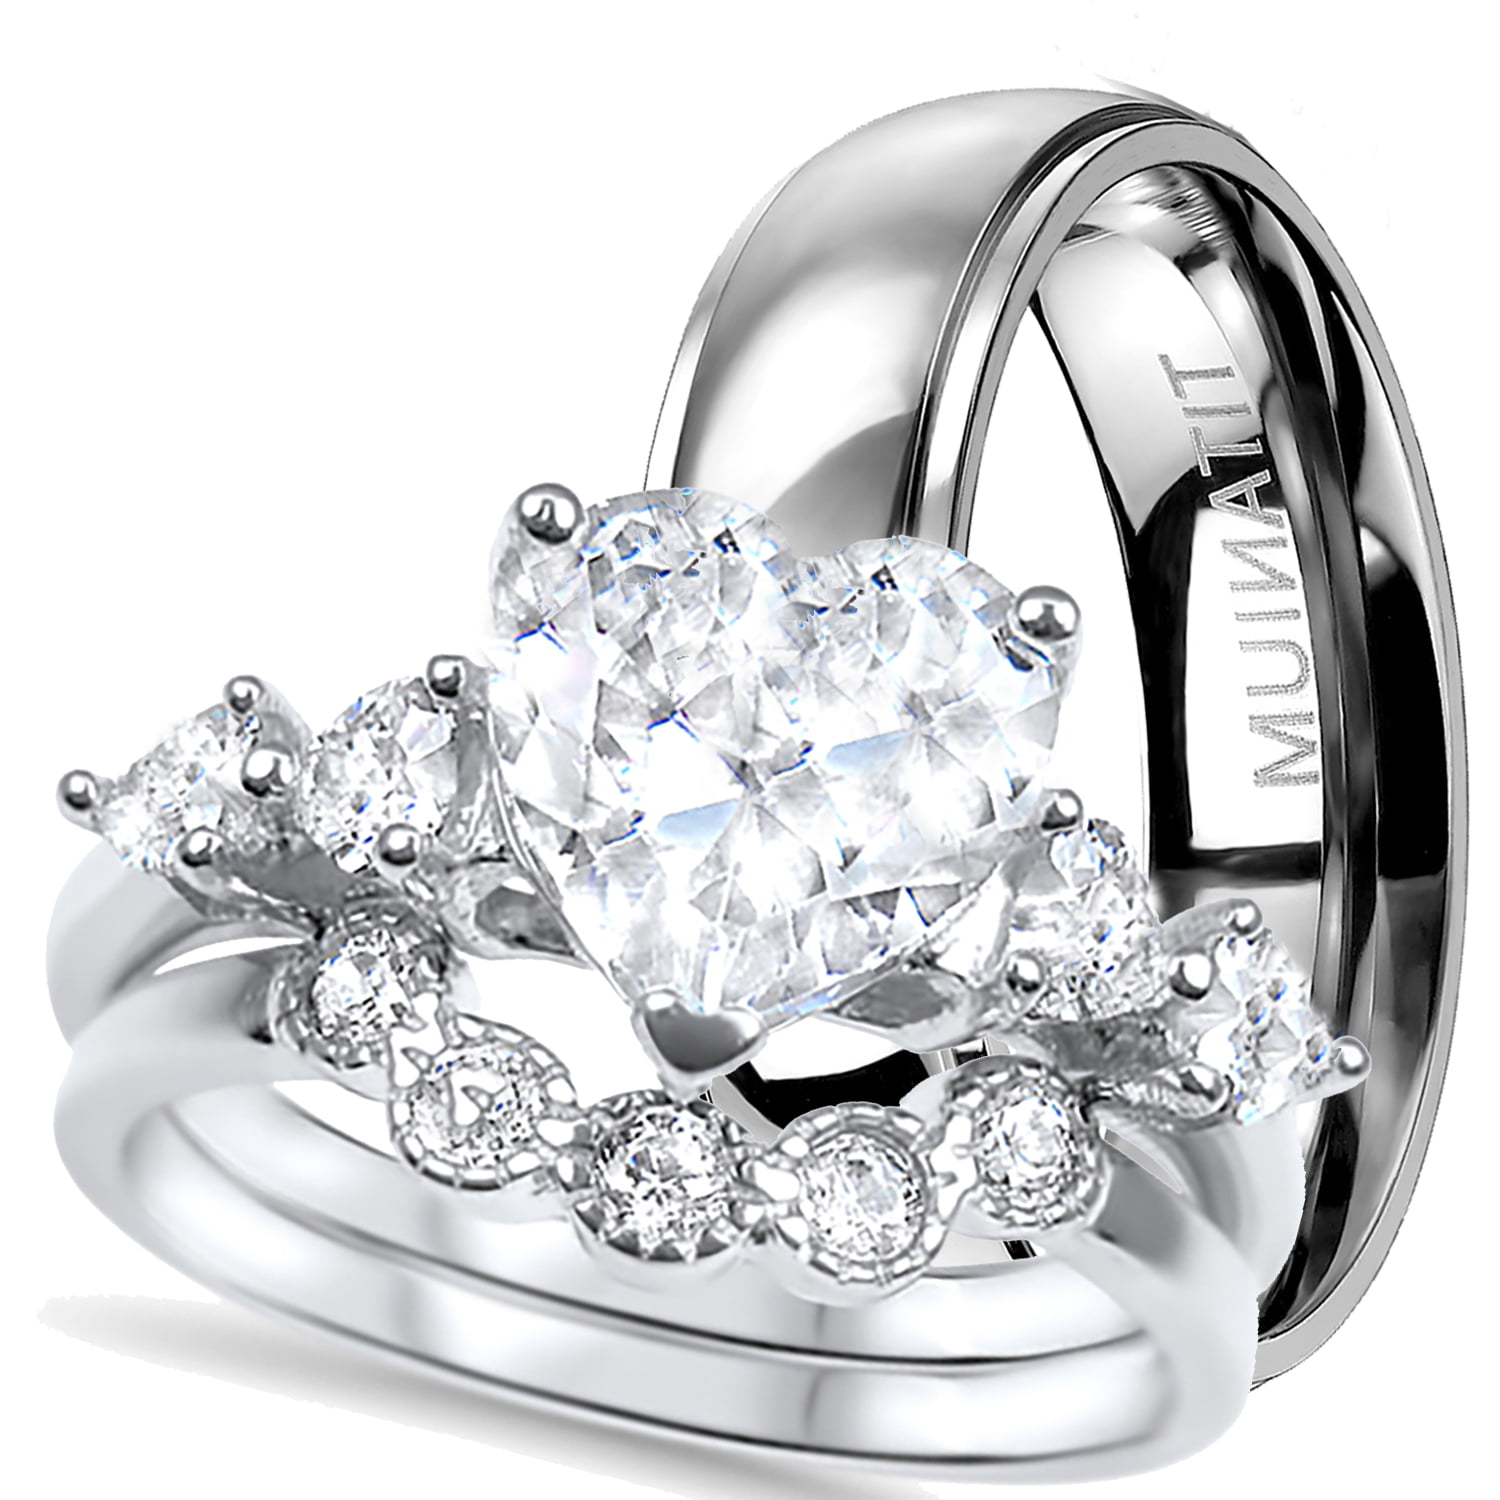 2.5ct heart shape simulated diamond ring wedding bridal set 14k rose gold  plated | eBay